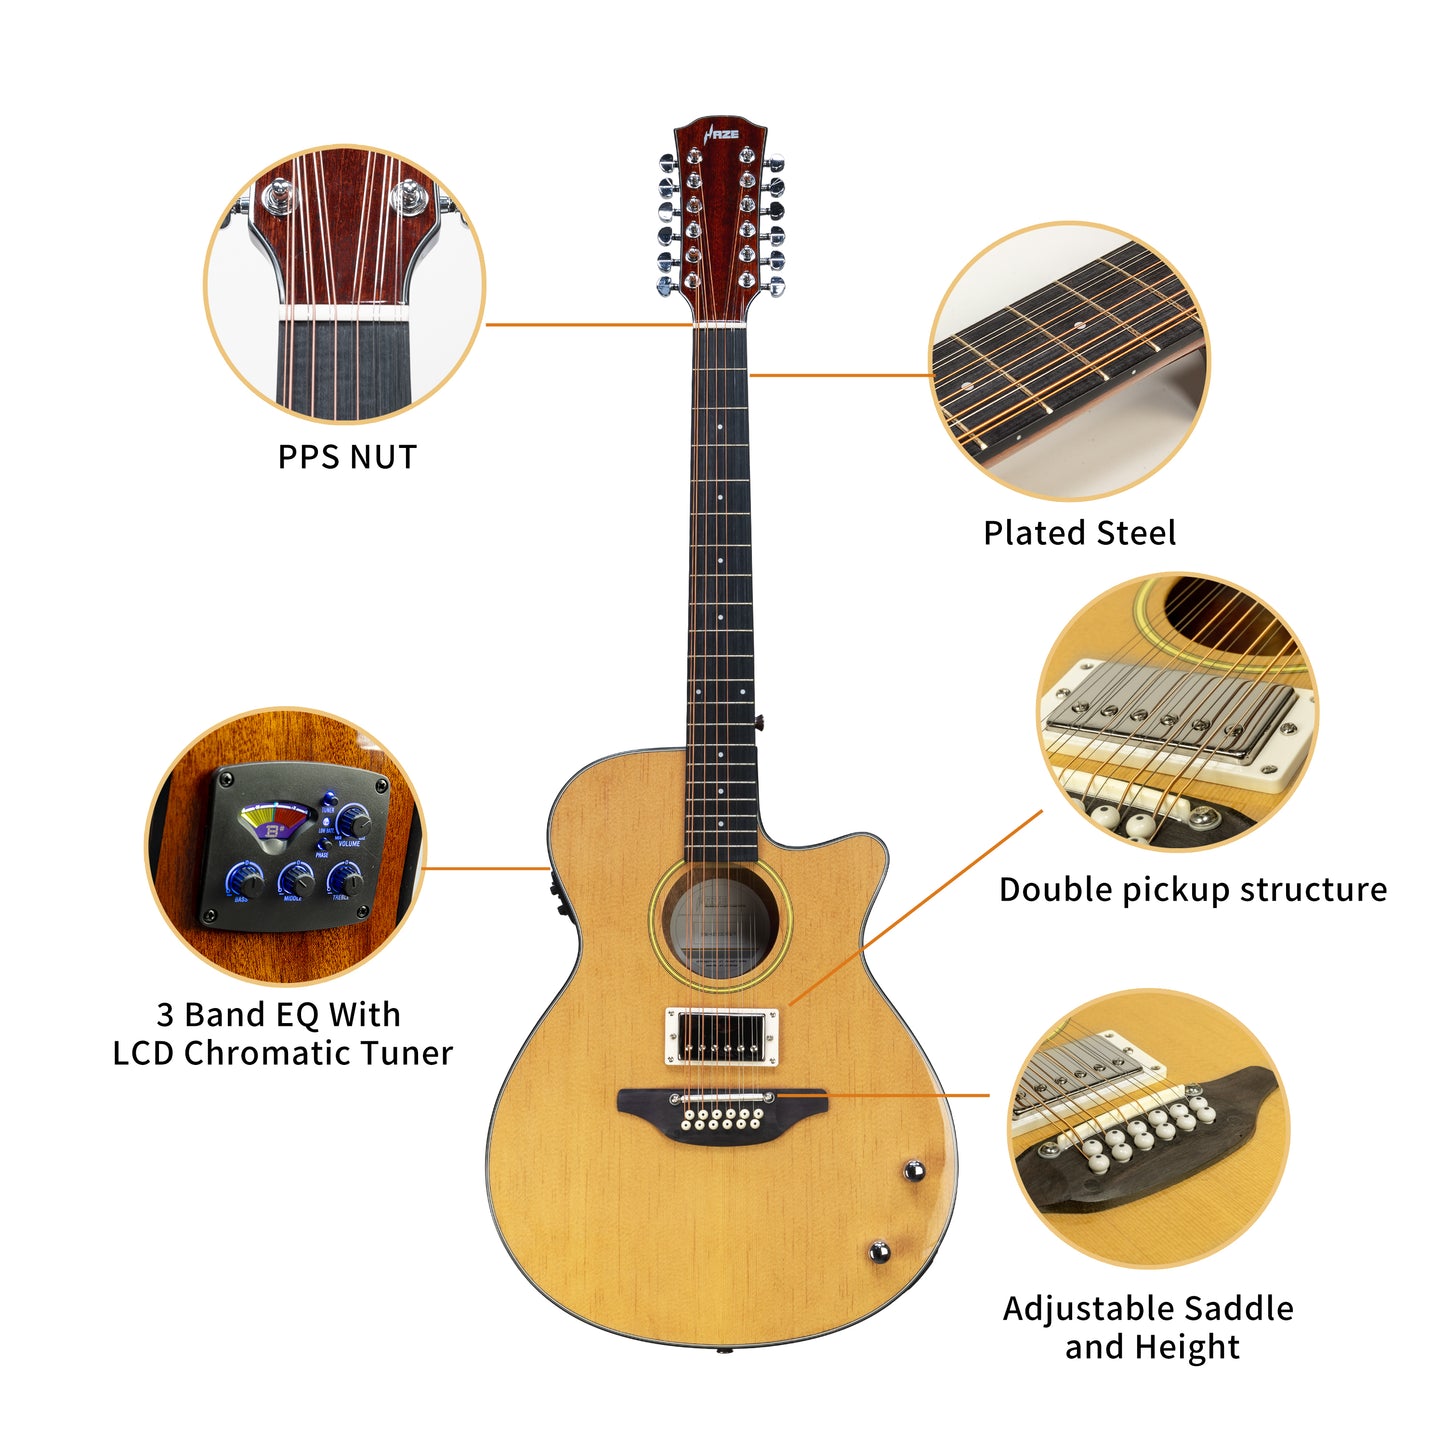 Haze 12-String Humbucker Saddle Height Adjustable Acoustic Guitar - Natural SDG82812CHEQN